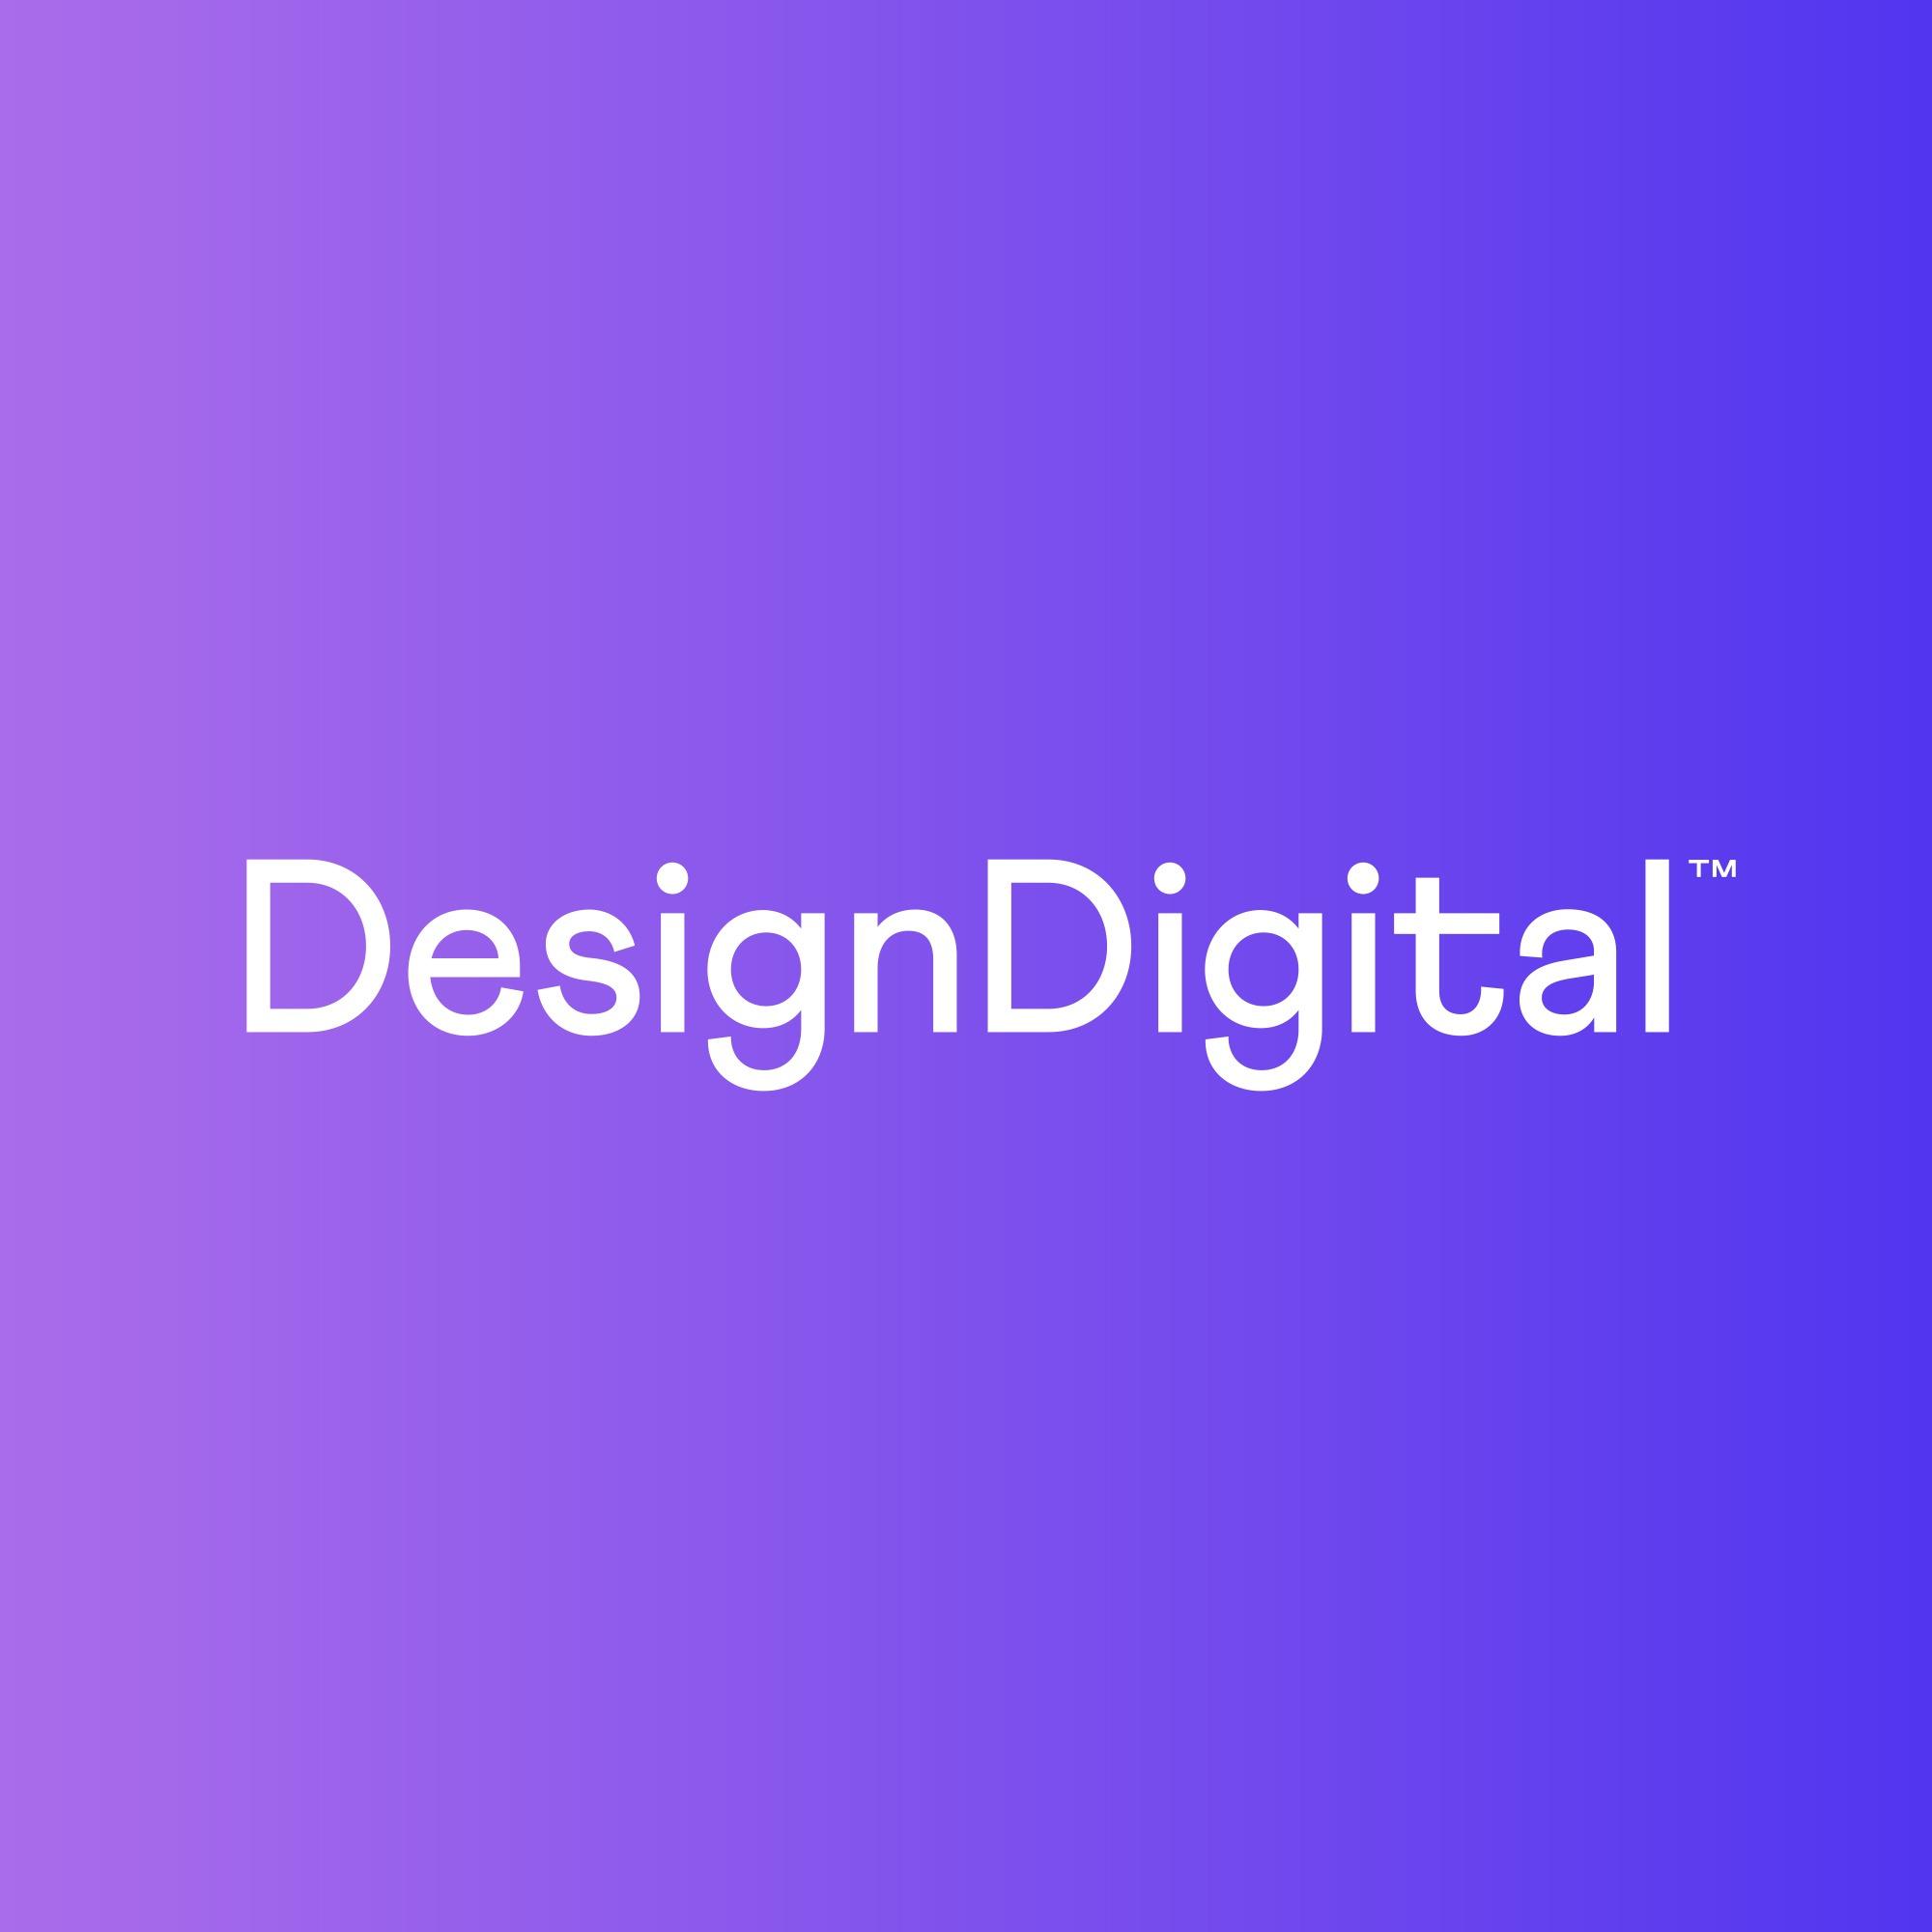 Design Digital Collingwood (13) 0021 2411